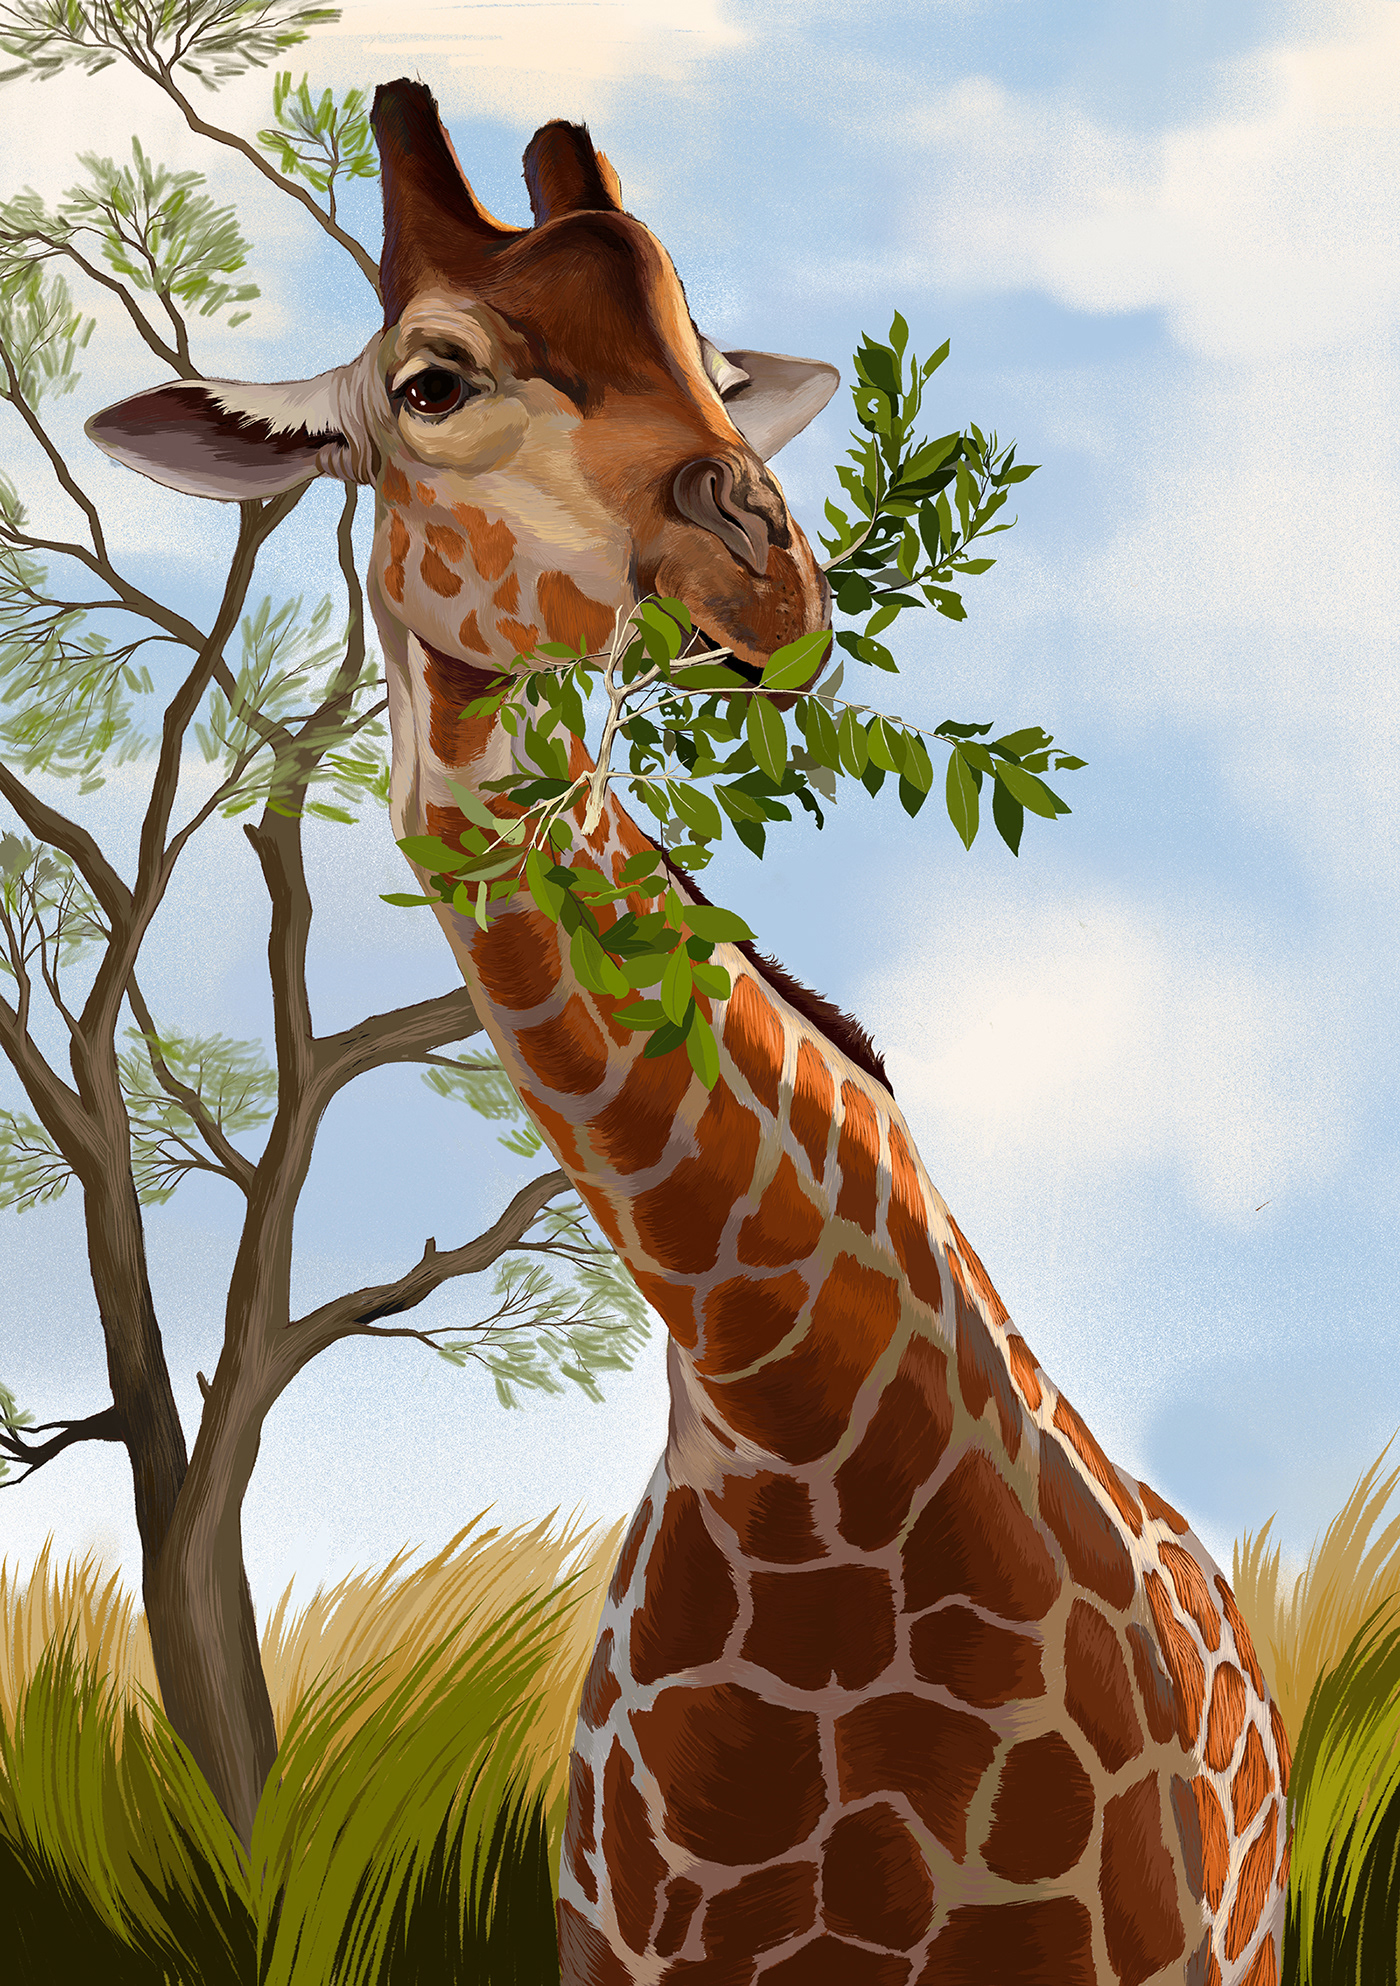 Image may contain: giraffe, sky and tree